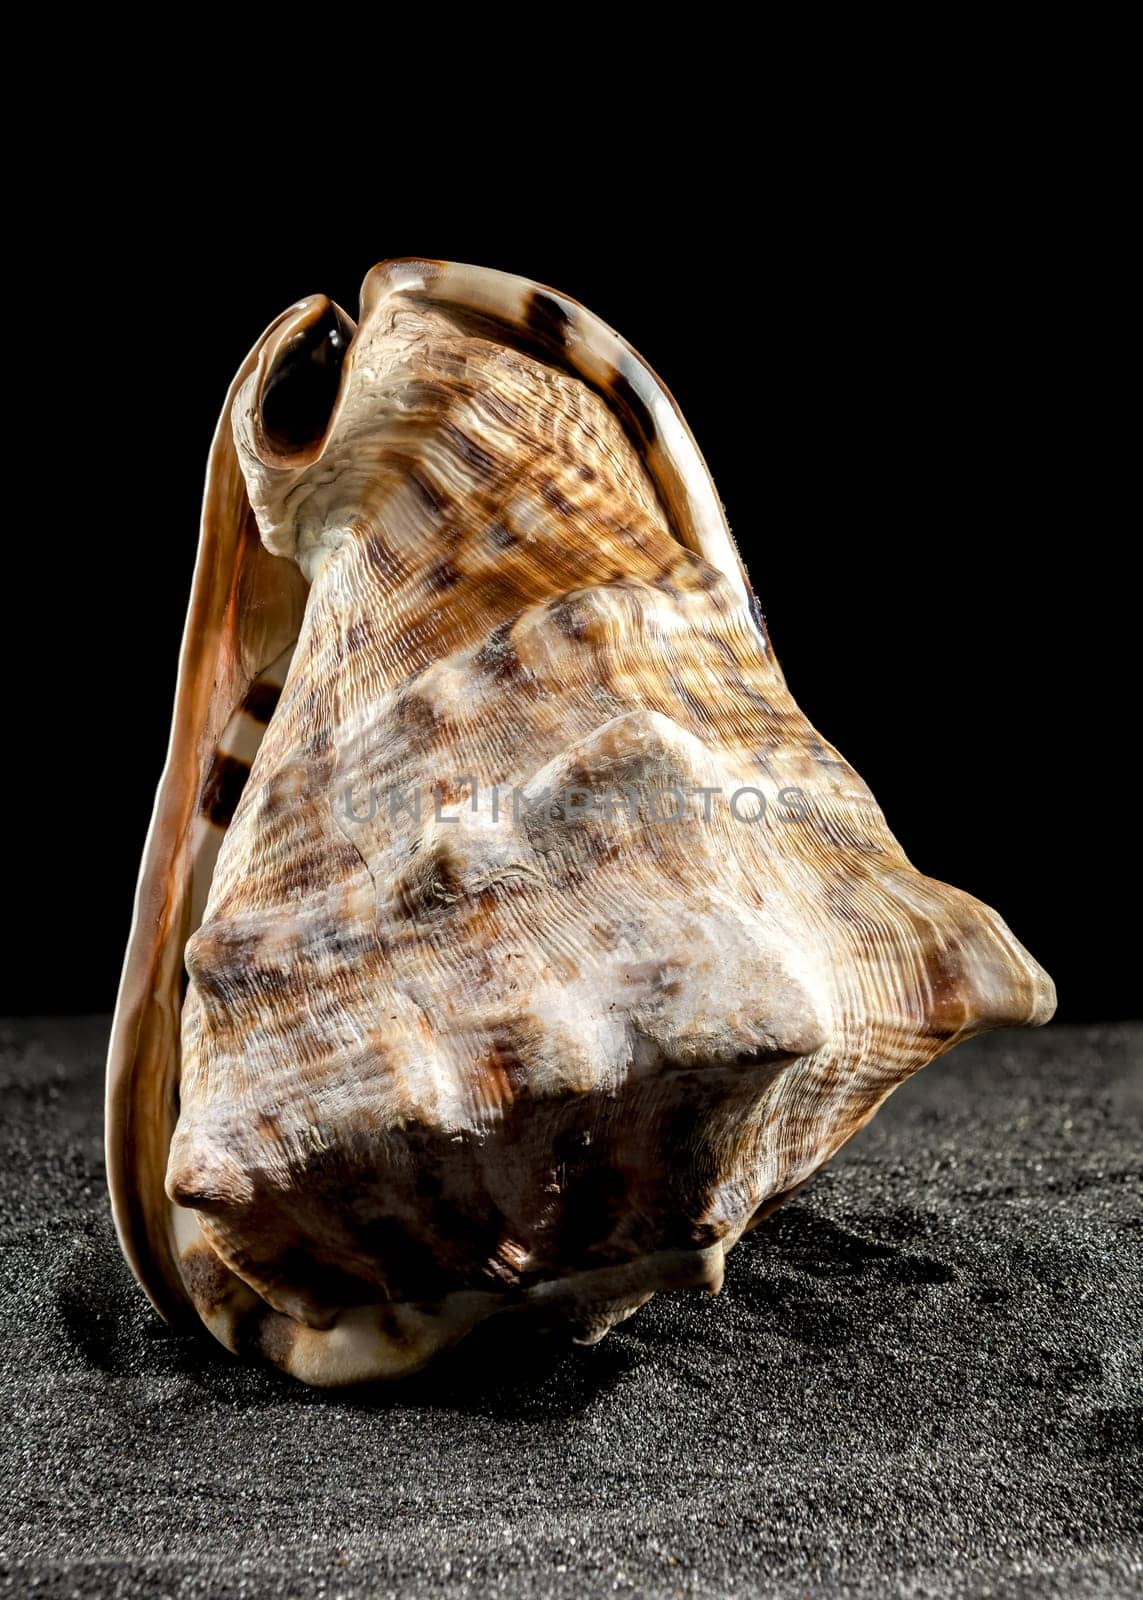 Caribbean King Helmet sea snail shell Cassis Tuberosa on a black sand background